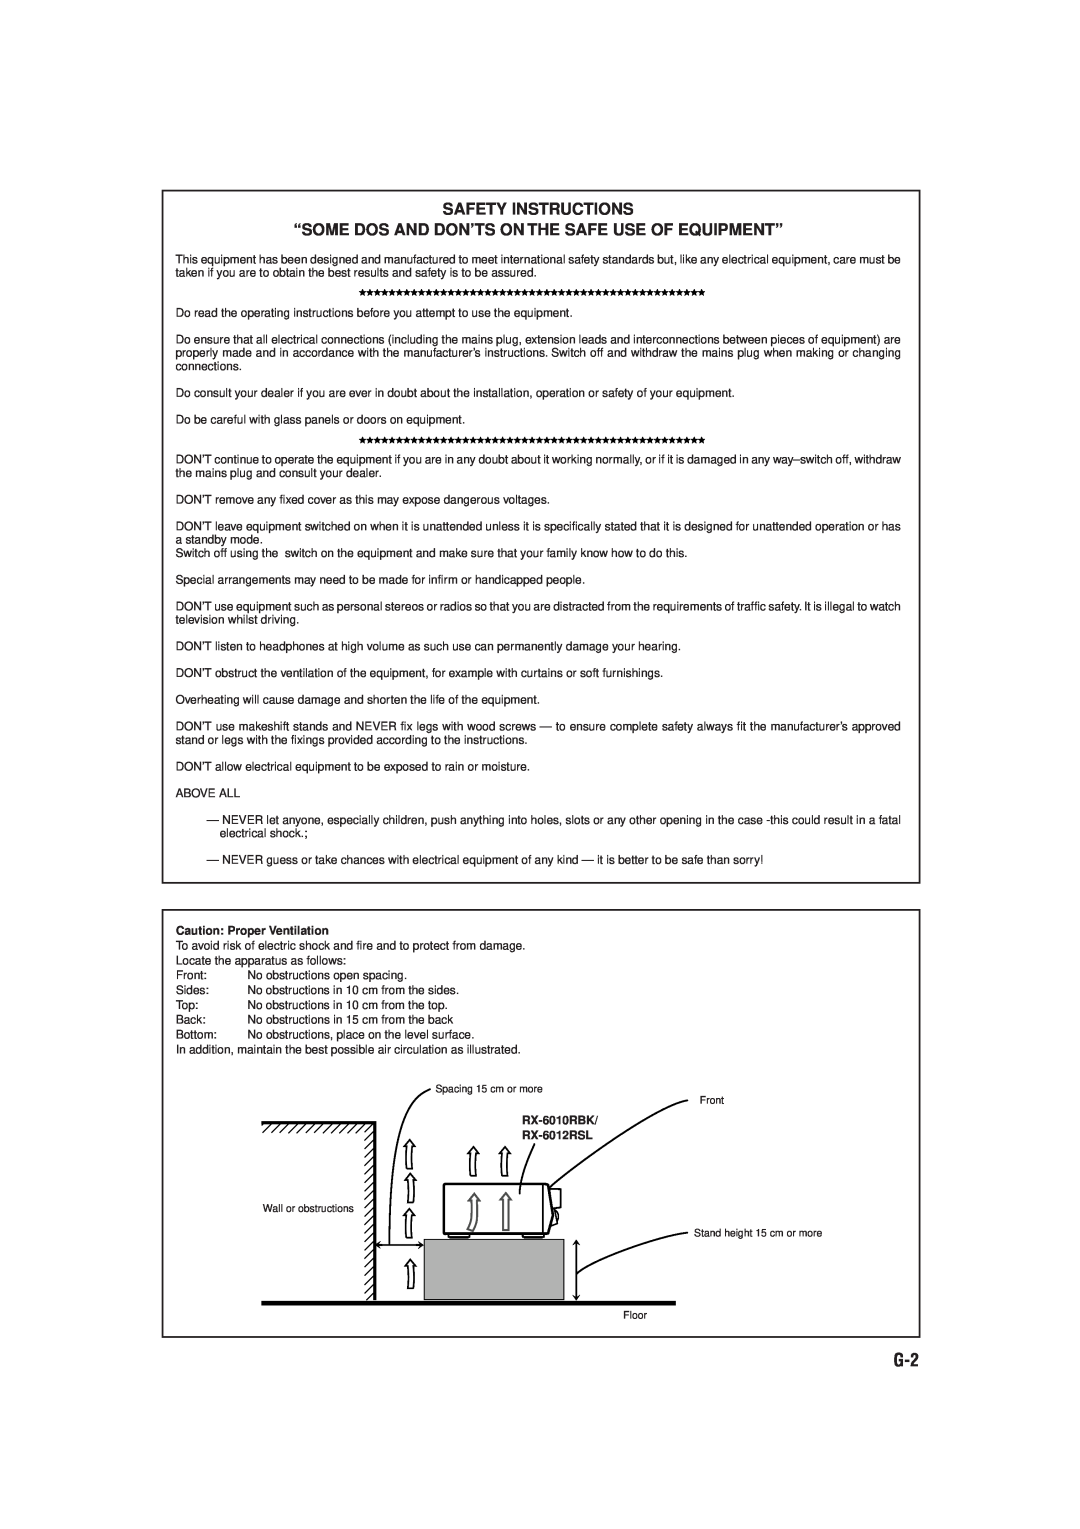 JVC RX-6010RBK, RX-6012RSL manual Safety Instructions, Caution Proper Ventilation, RX-6010RBK RX-6012RSL 